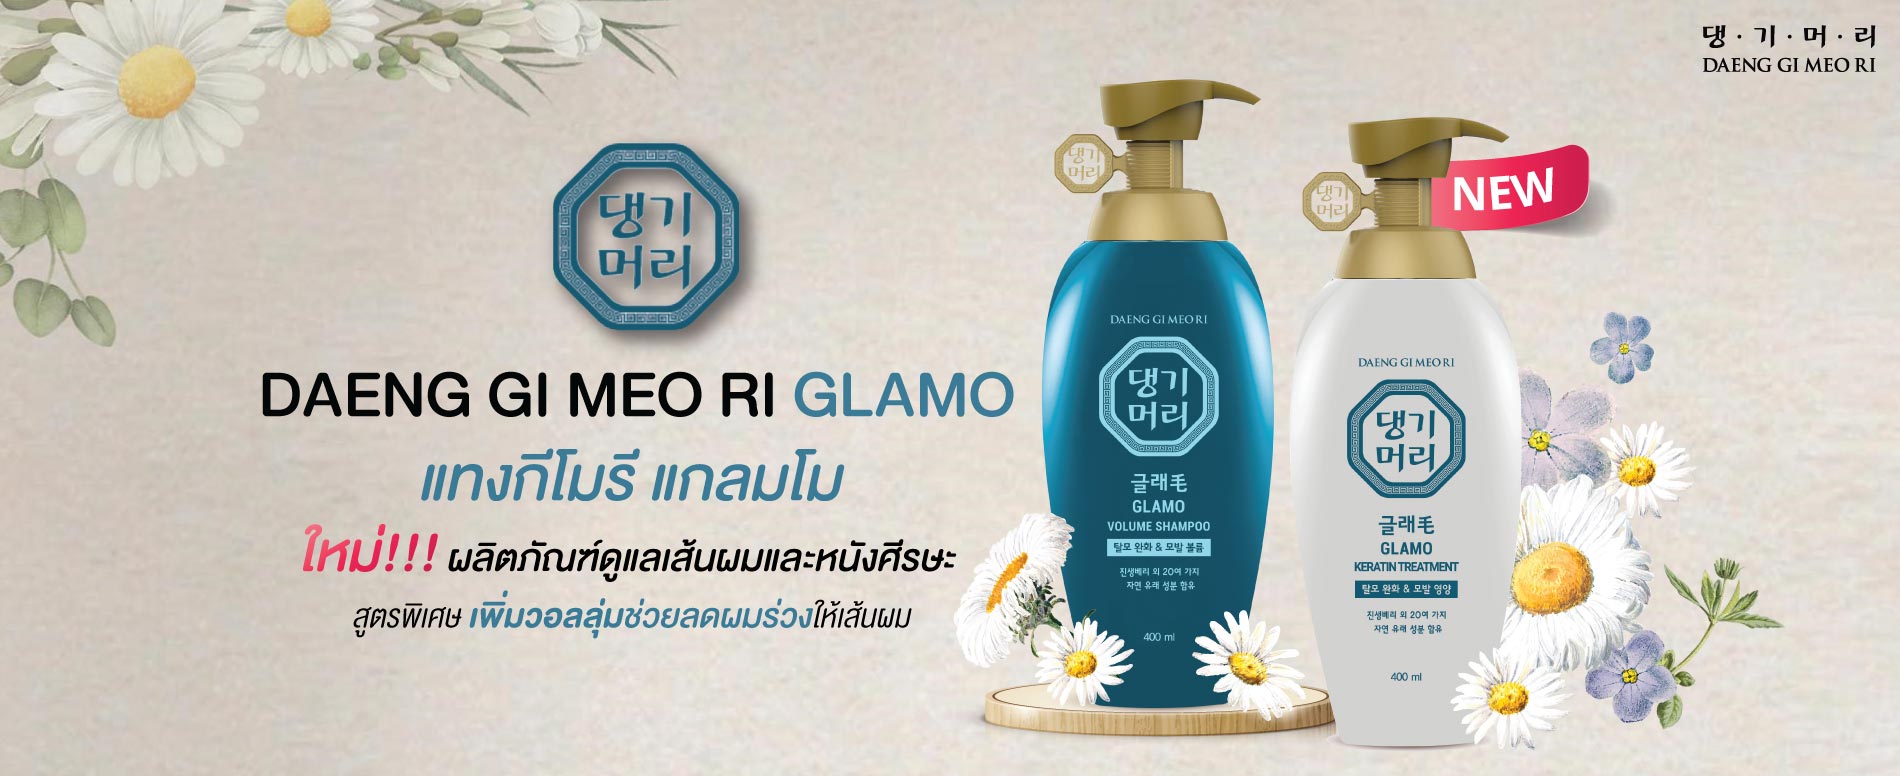 Daeng Gi Meo Ri, Daeng Gi Meo Ri รีวิว, Daeng Gi Meo Ri ราคา, Daeng Gi Meo Ri Glamo Volume Shampoo, Daeng Gi Meo Ri Glamo Volume Shampoo รีวิว, Daeng Gi Meo Ri Glamo Volume Shampoo ราคา, Daeng Gi Meo Ri แชมพู, Shampoo, แทงกีโมรี, แทงกีโมรี รีวิว, แทงกีโมรี แชมพู, แชมพูลดผมร่วง